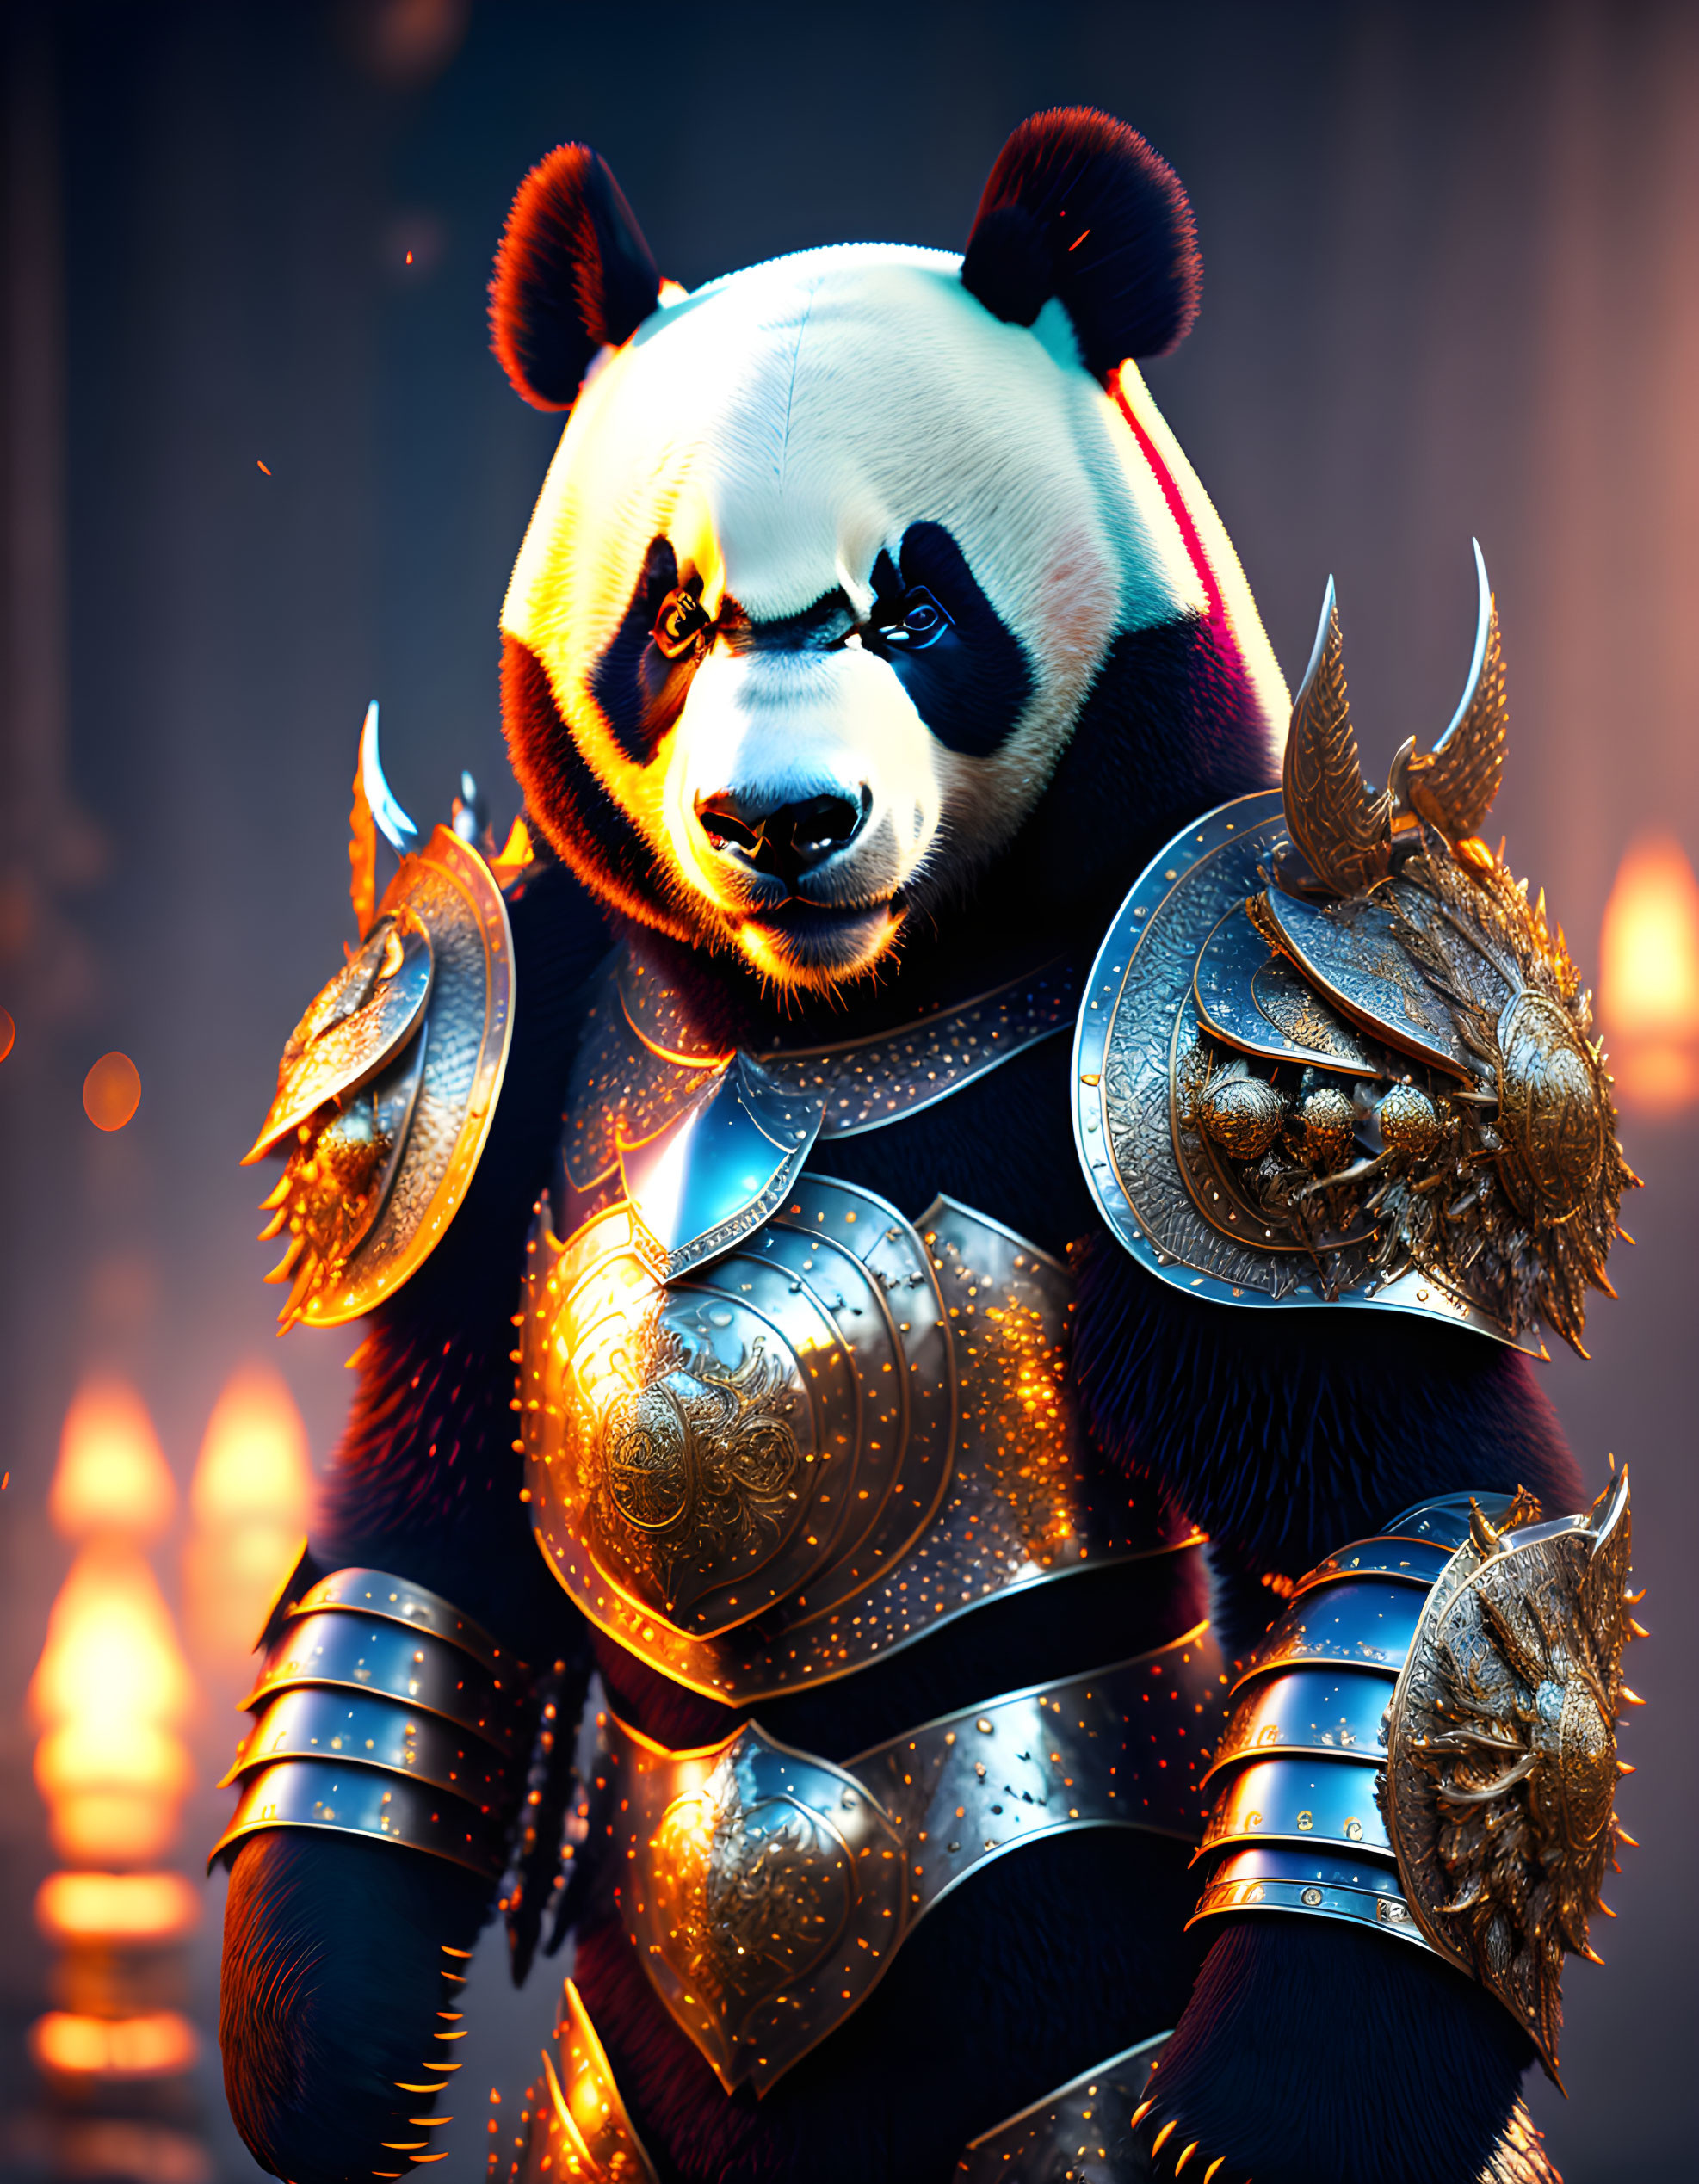 Detailed illustration: Panda in ornate golden armor with noble warrior vibe, against dimly lit background